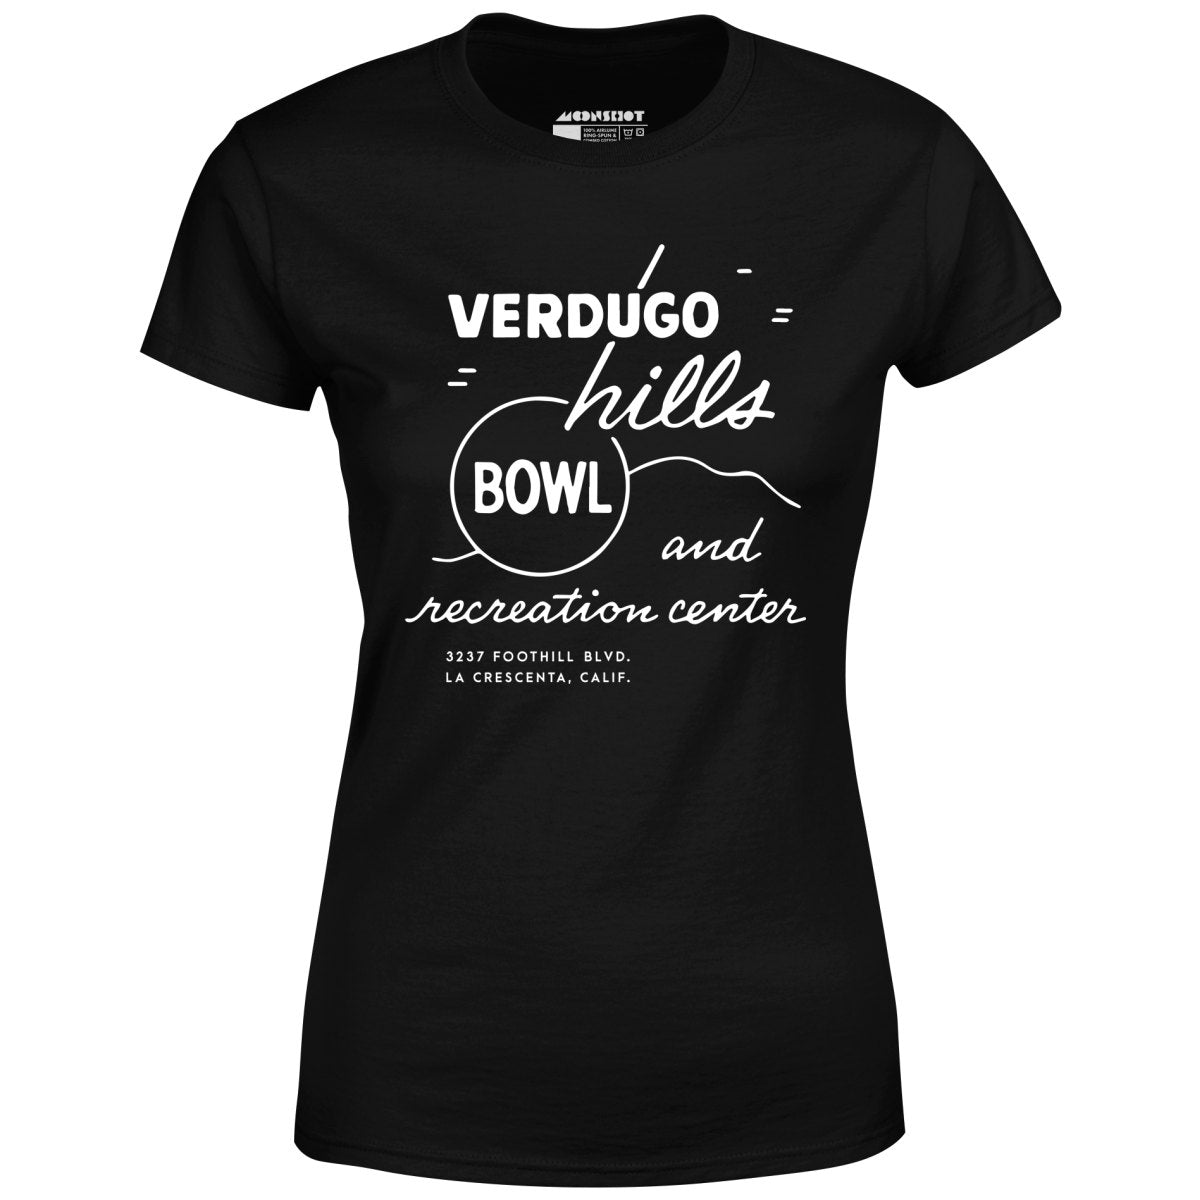 Verdugo Hills v2 - La Crescenta, CA - Vintage Bowling Alley - Women's T-Shirt